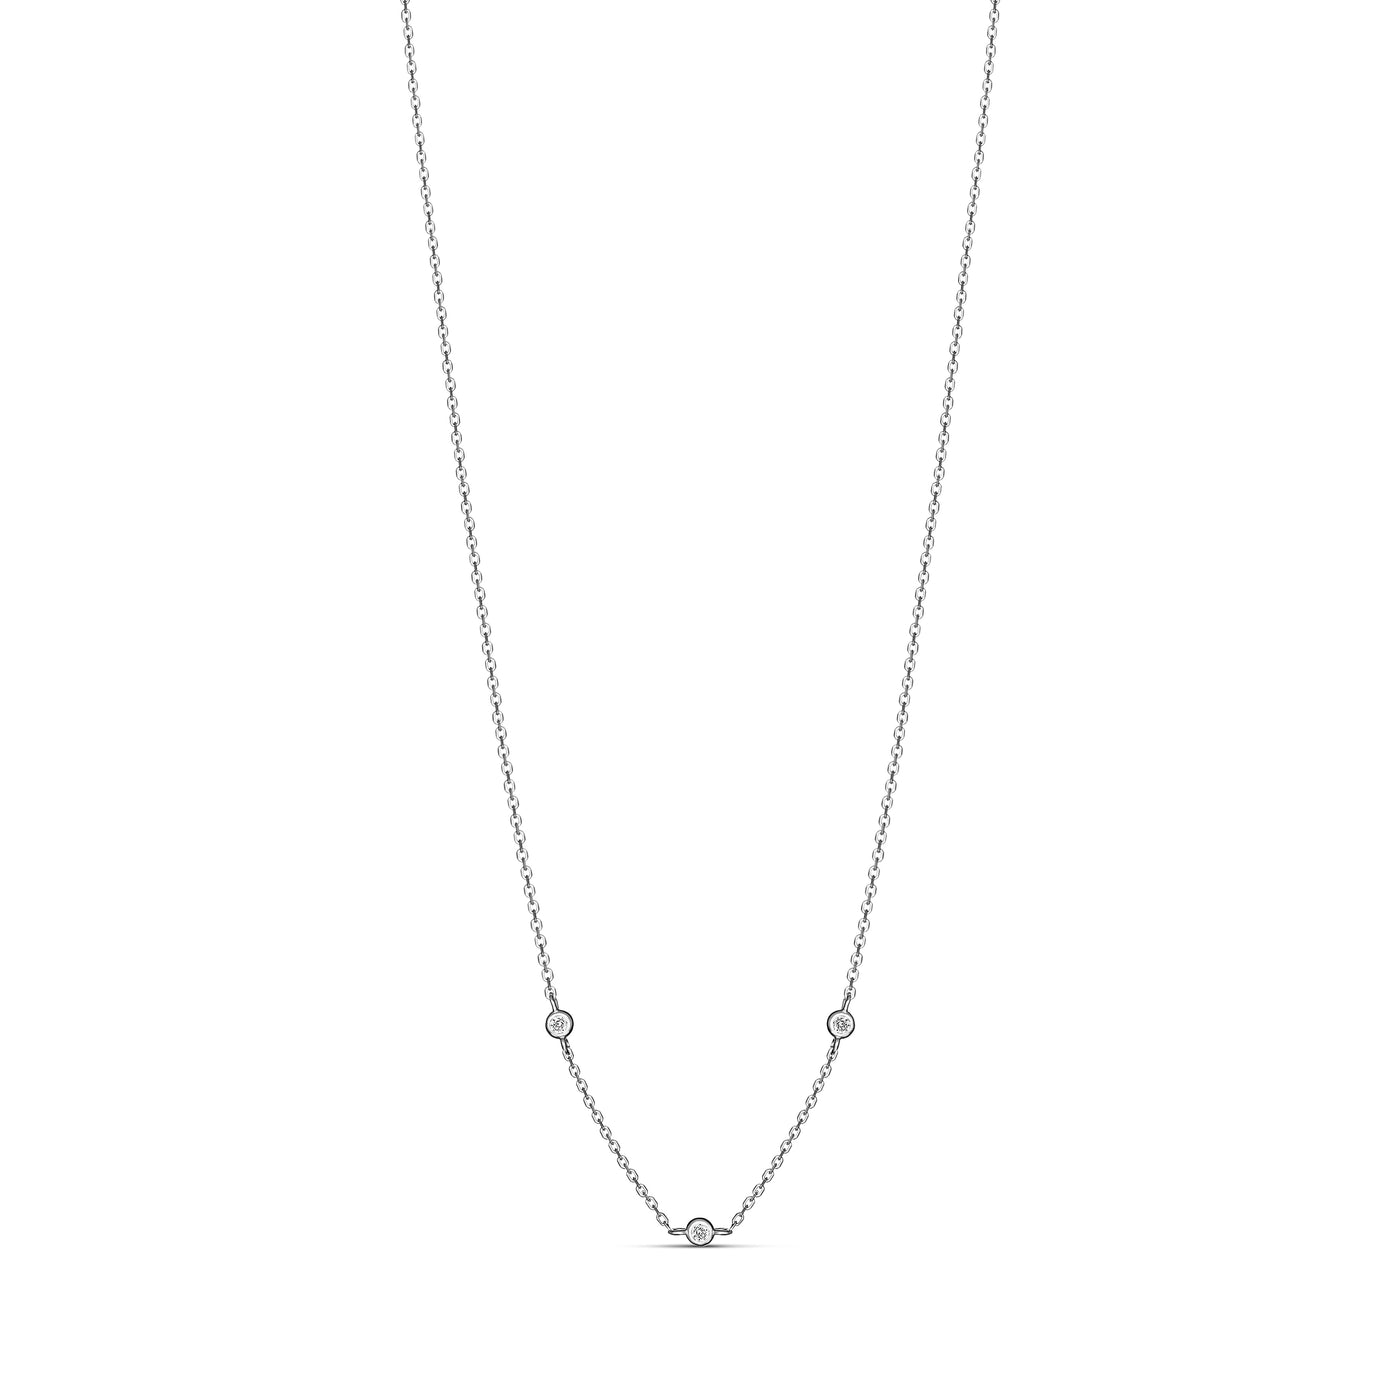 9ct bezel set diamond necklace featuring 3 diamonds